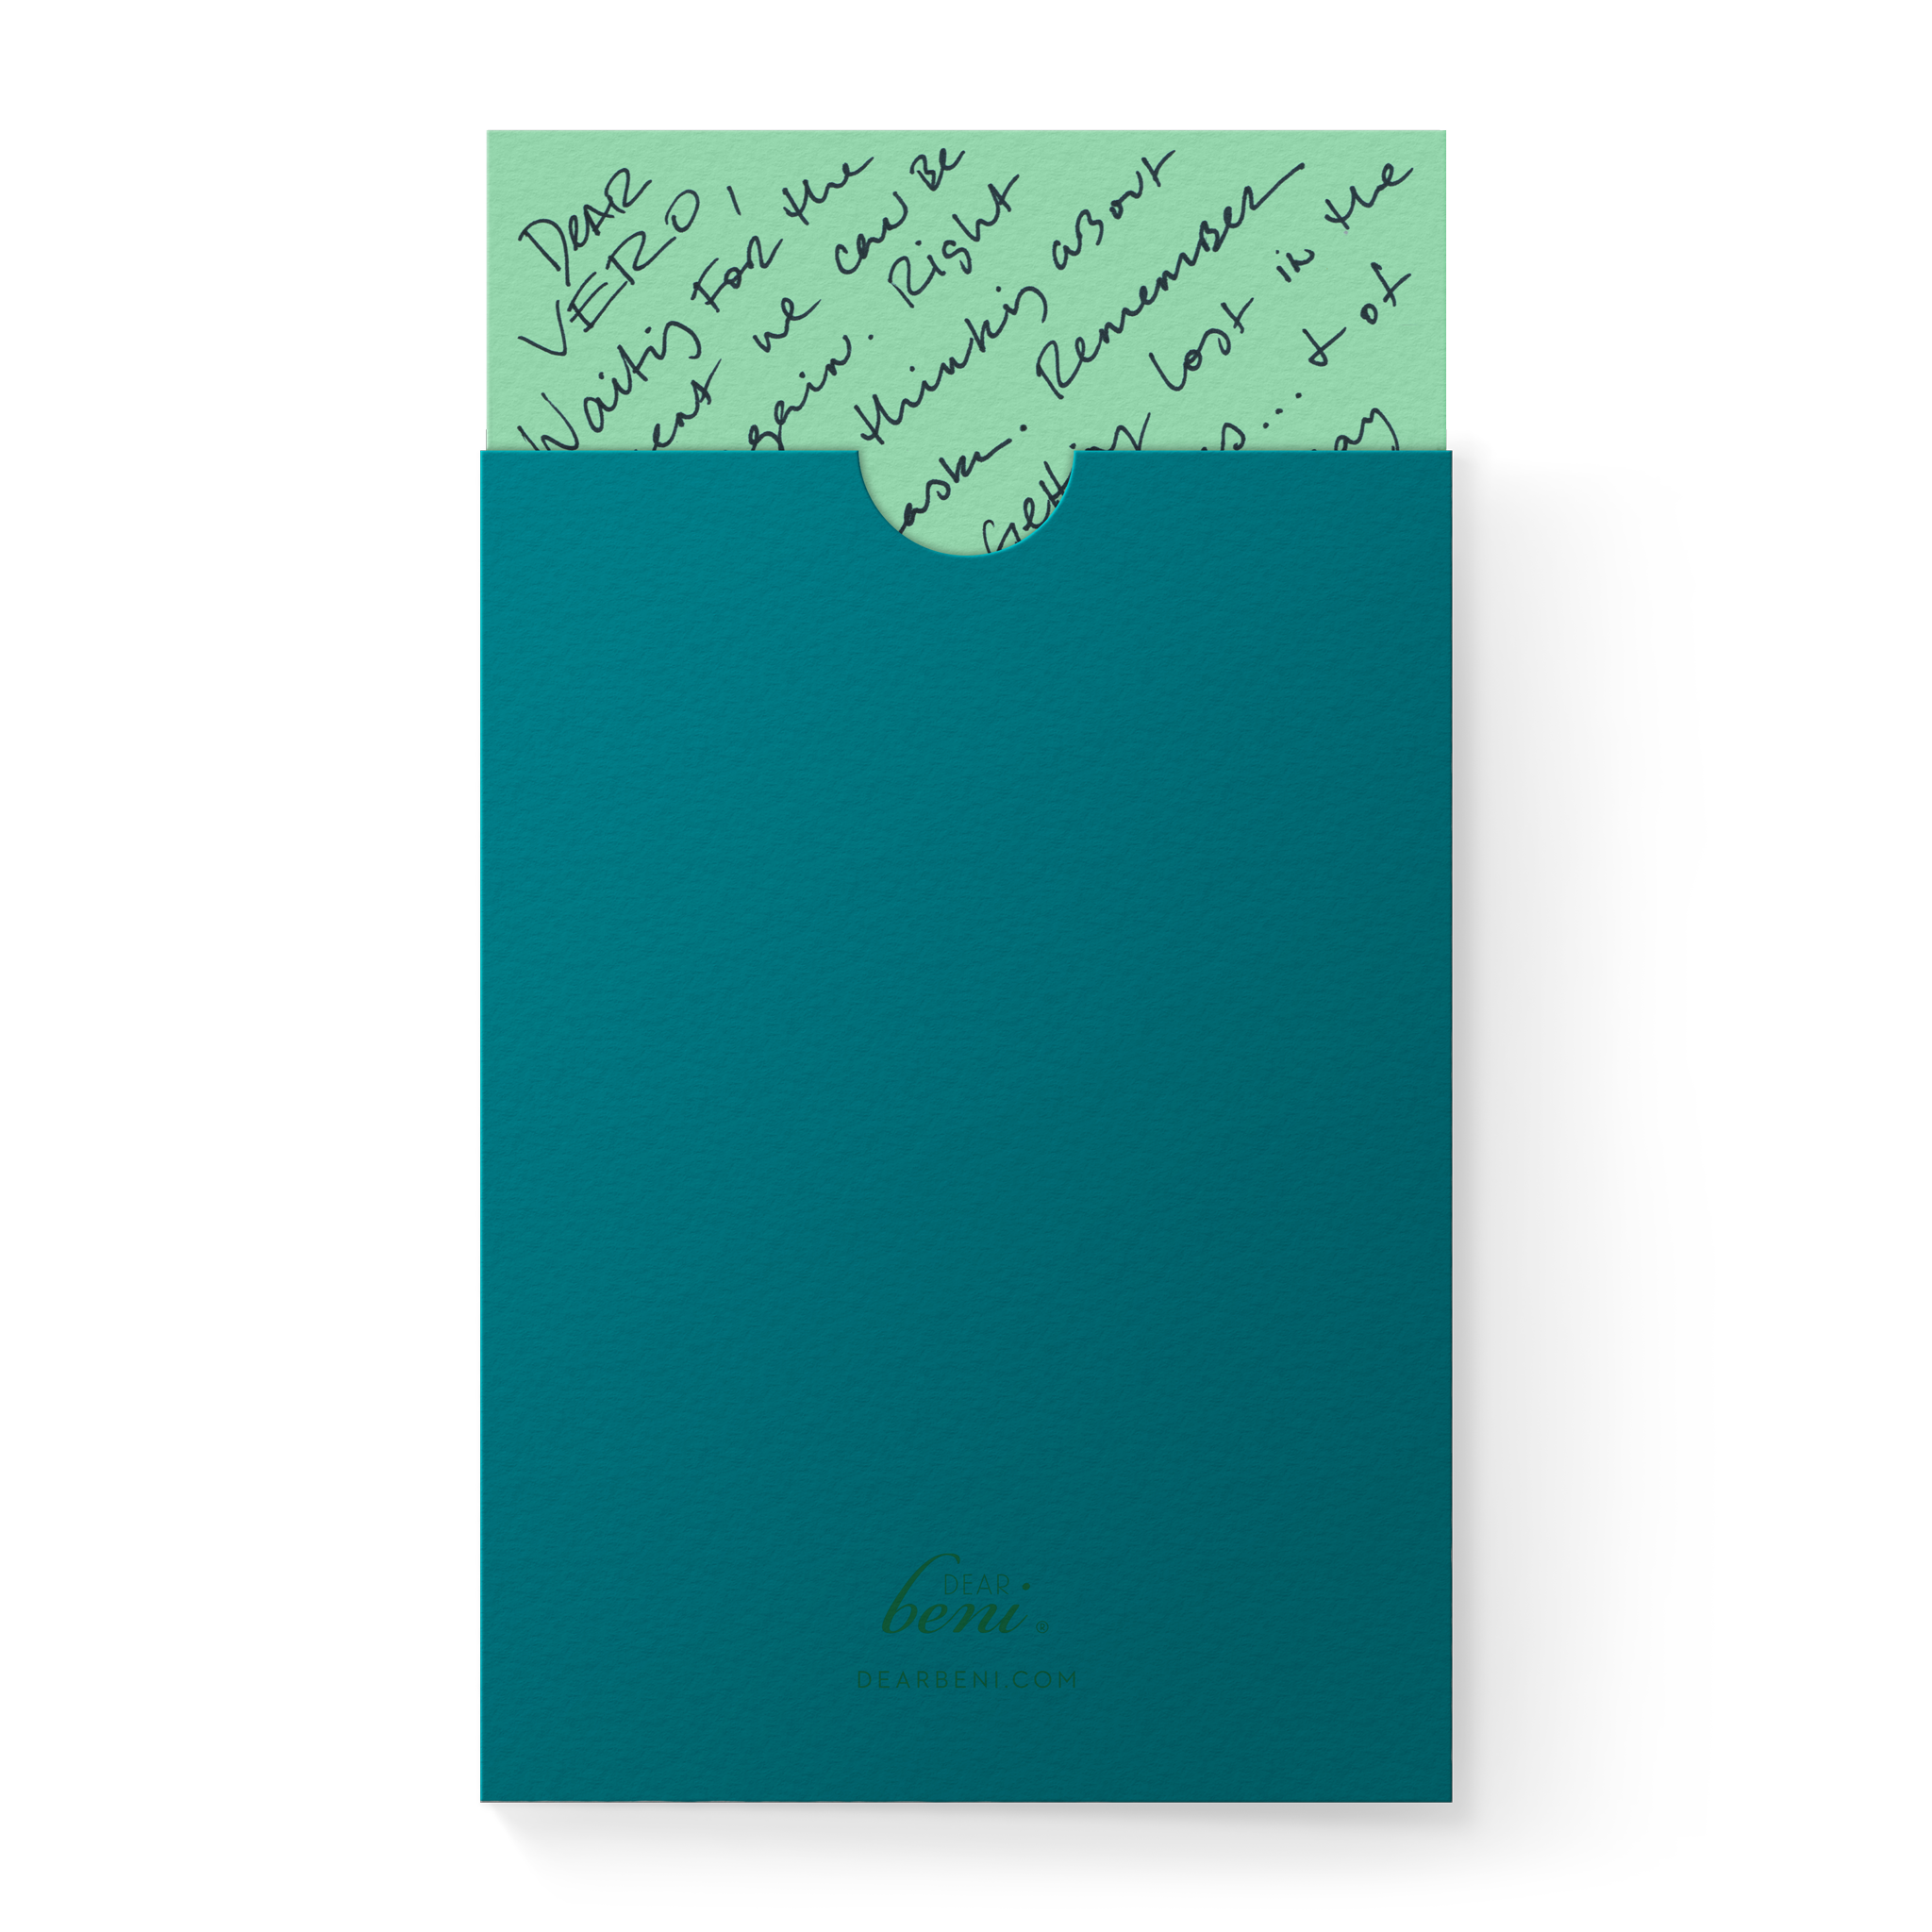 Cool Key Lime Pocket Card